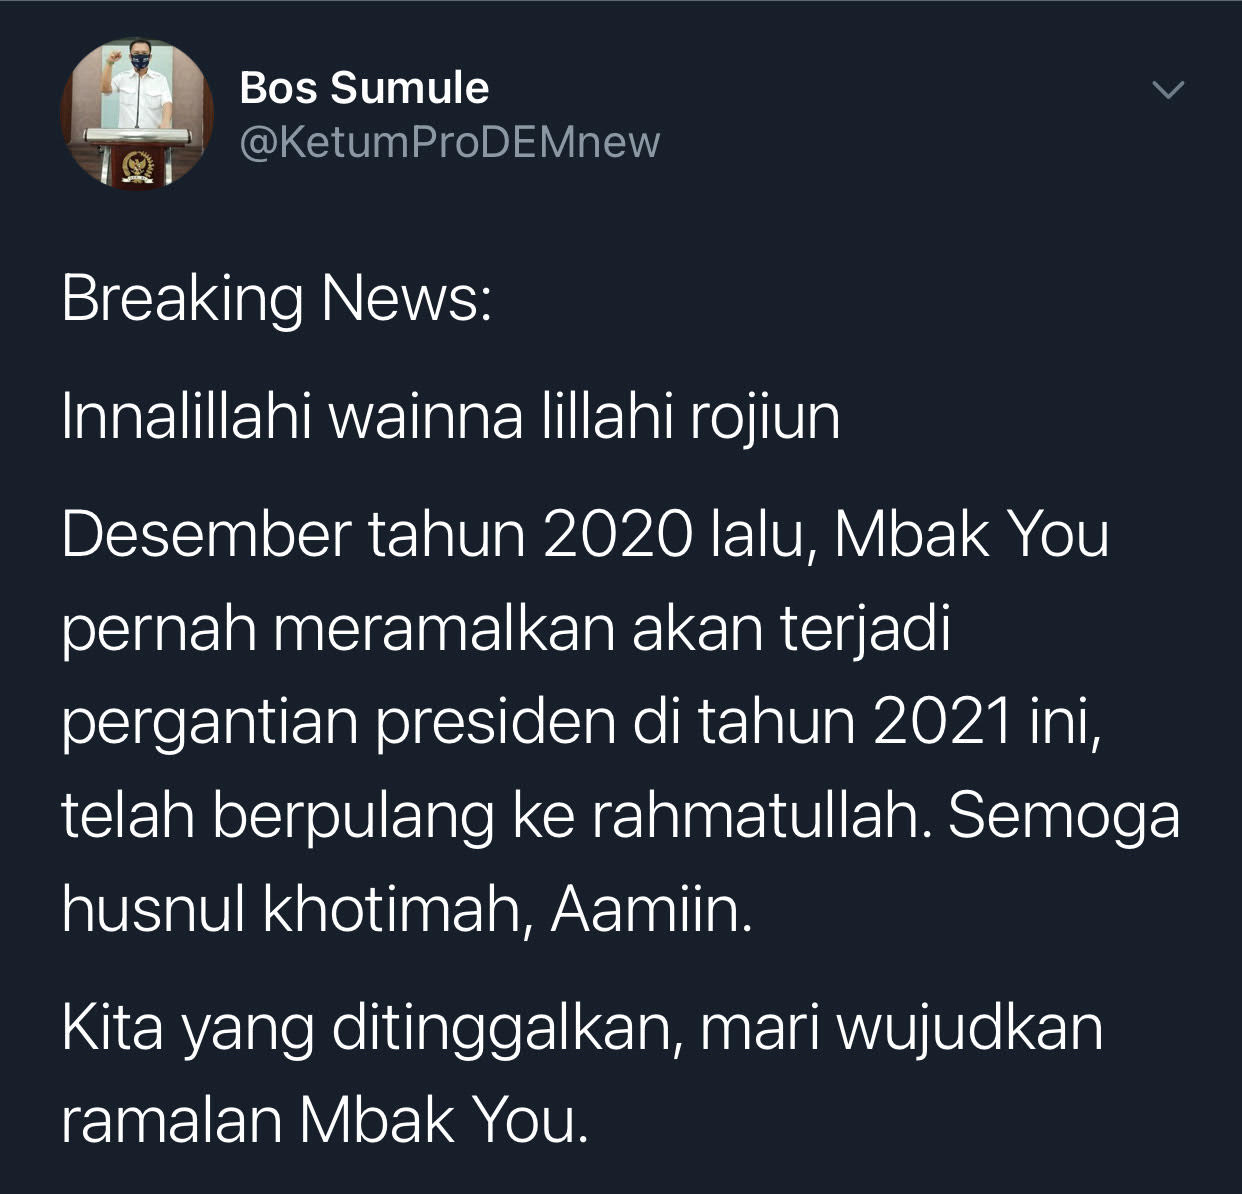 Iwan Sumule ajak masyarakat untuk mewujudkan ramalan Mbak You soal akan ada pergantian presiden pada tahun 2021.